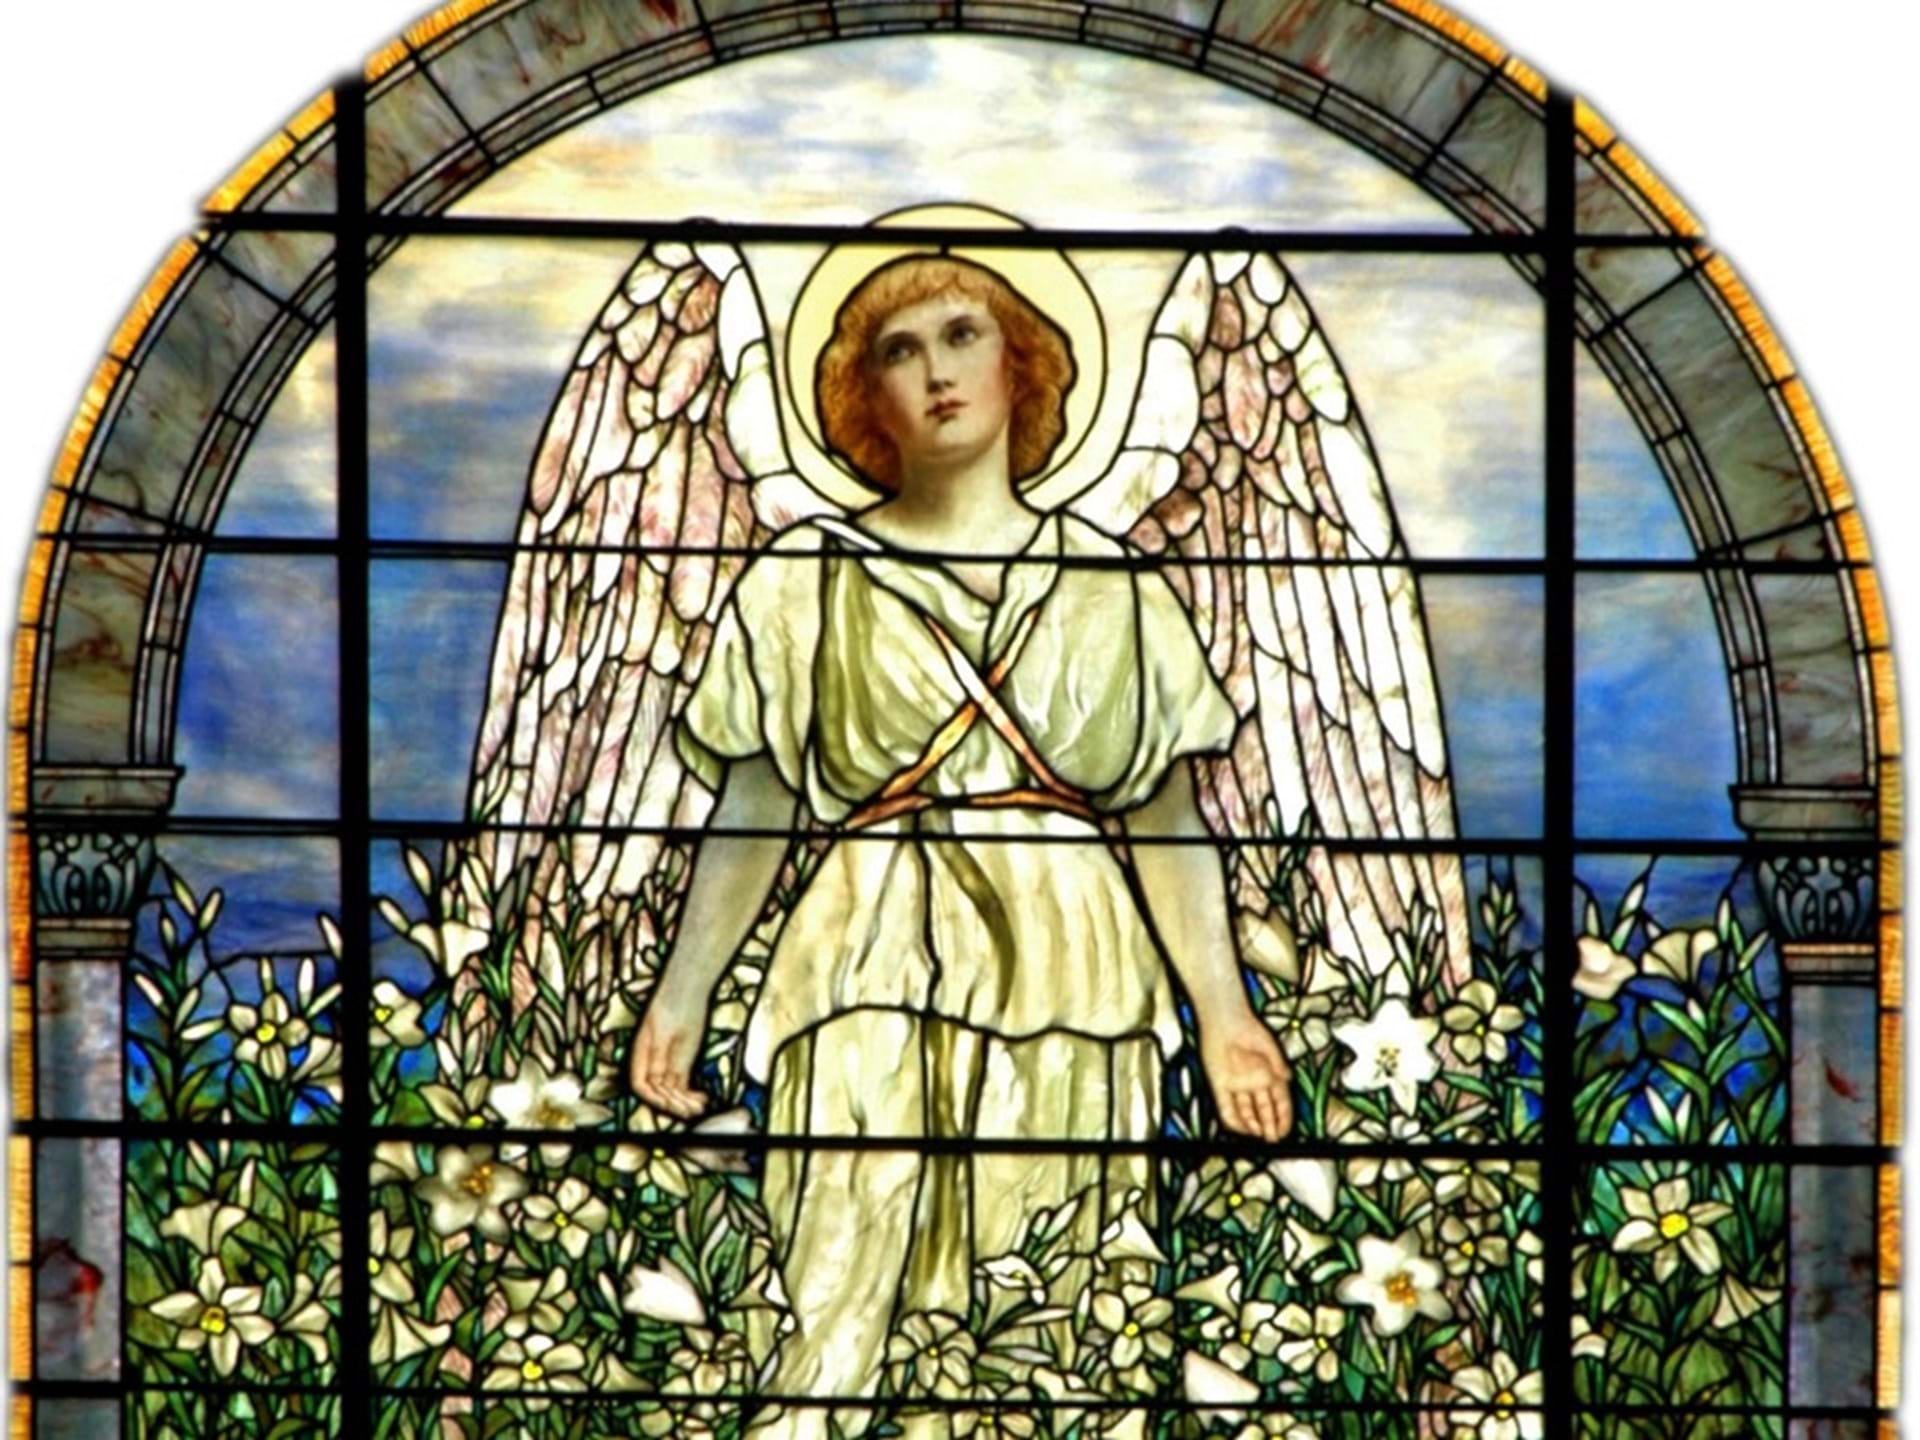 Tiffany Window - The Angel Among the Lilies